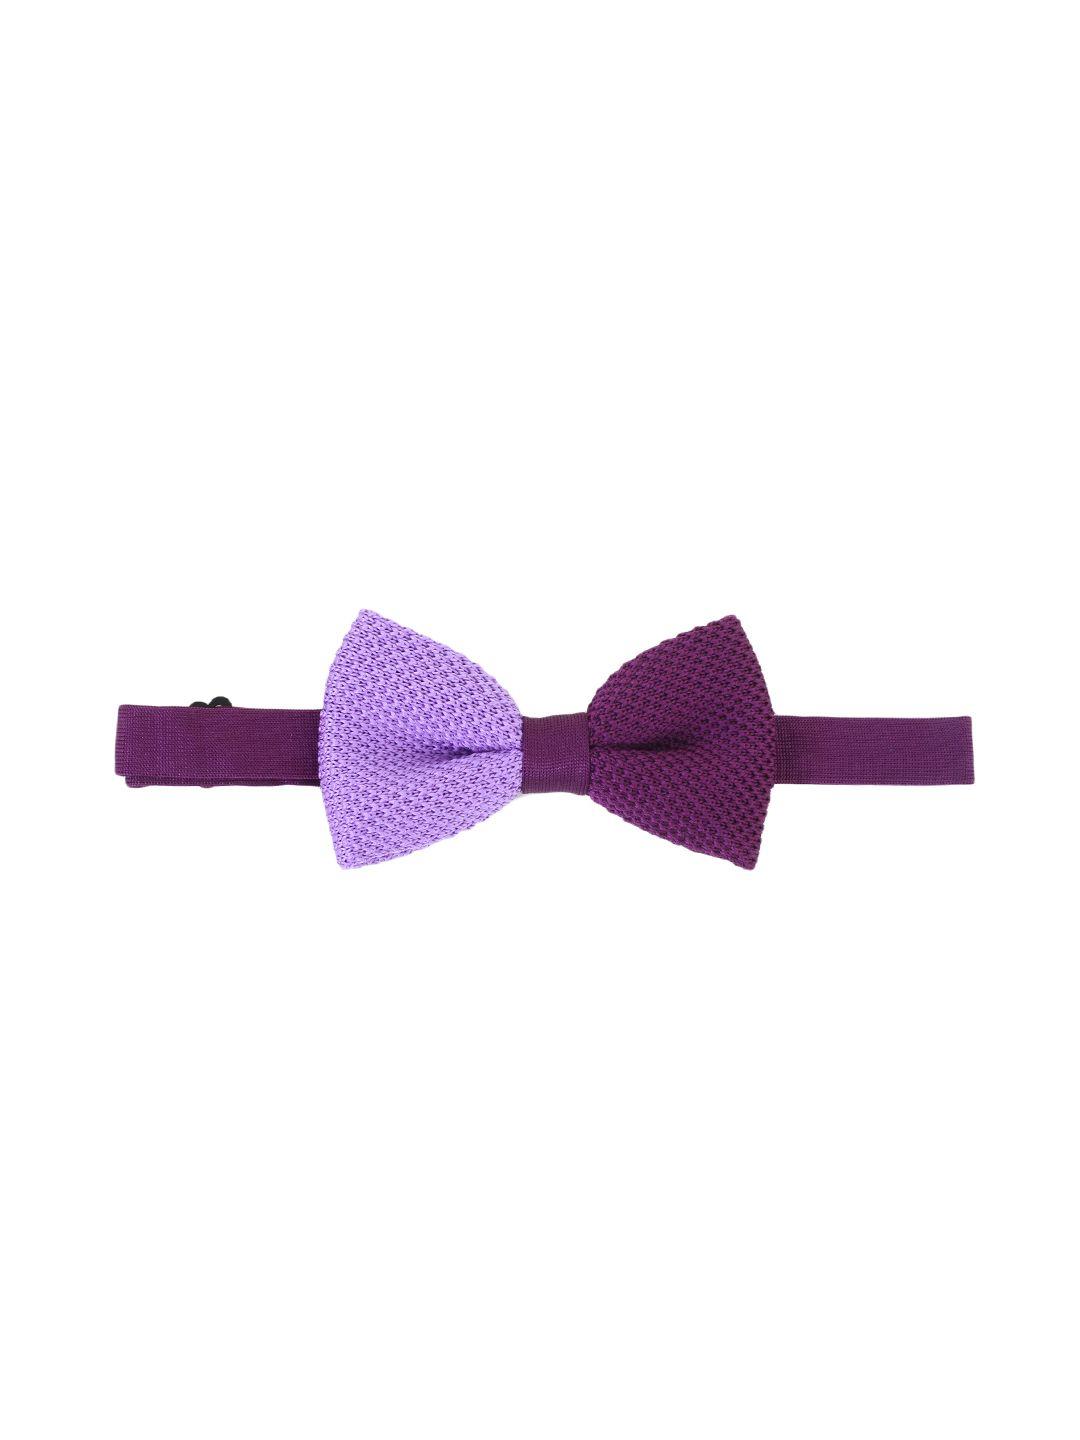 alvaro castagnino purple & lavender colourblocked patterned bow tie